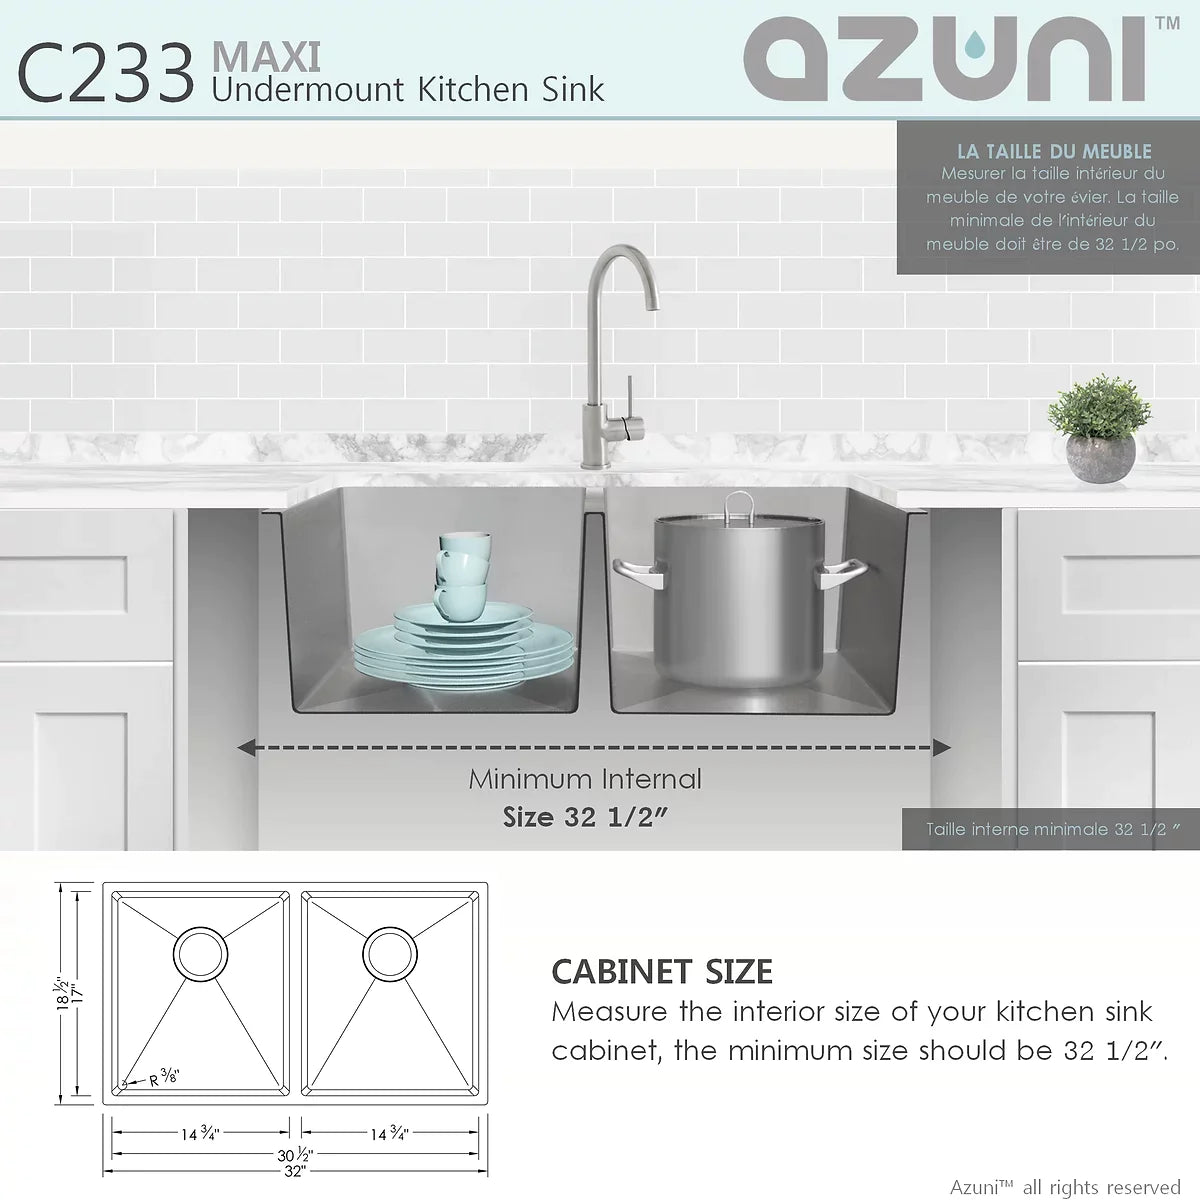 Stylish Azuni 32" x 18.5" Maxi Undermount Double Bowl Kitchen Sink Stainless Steel C233